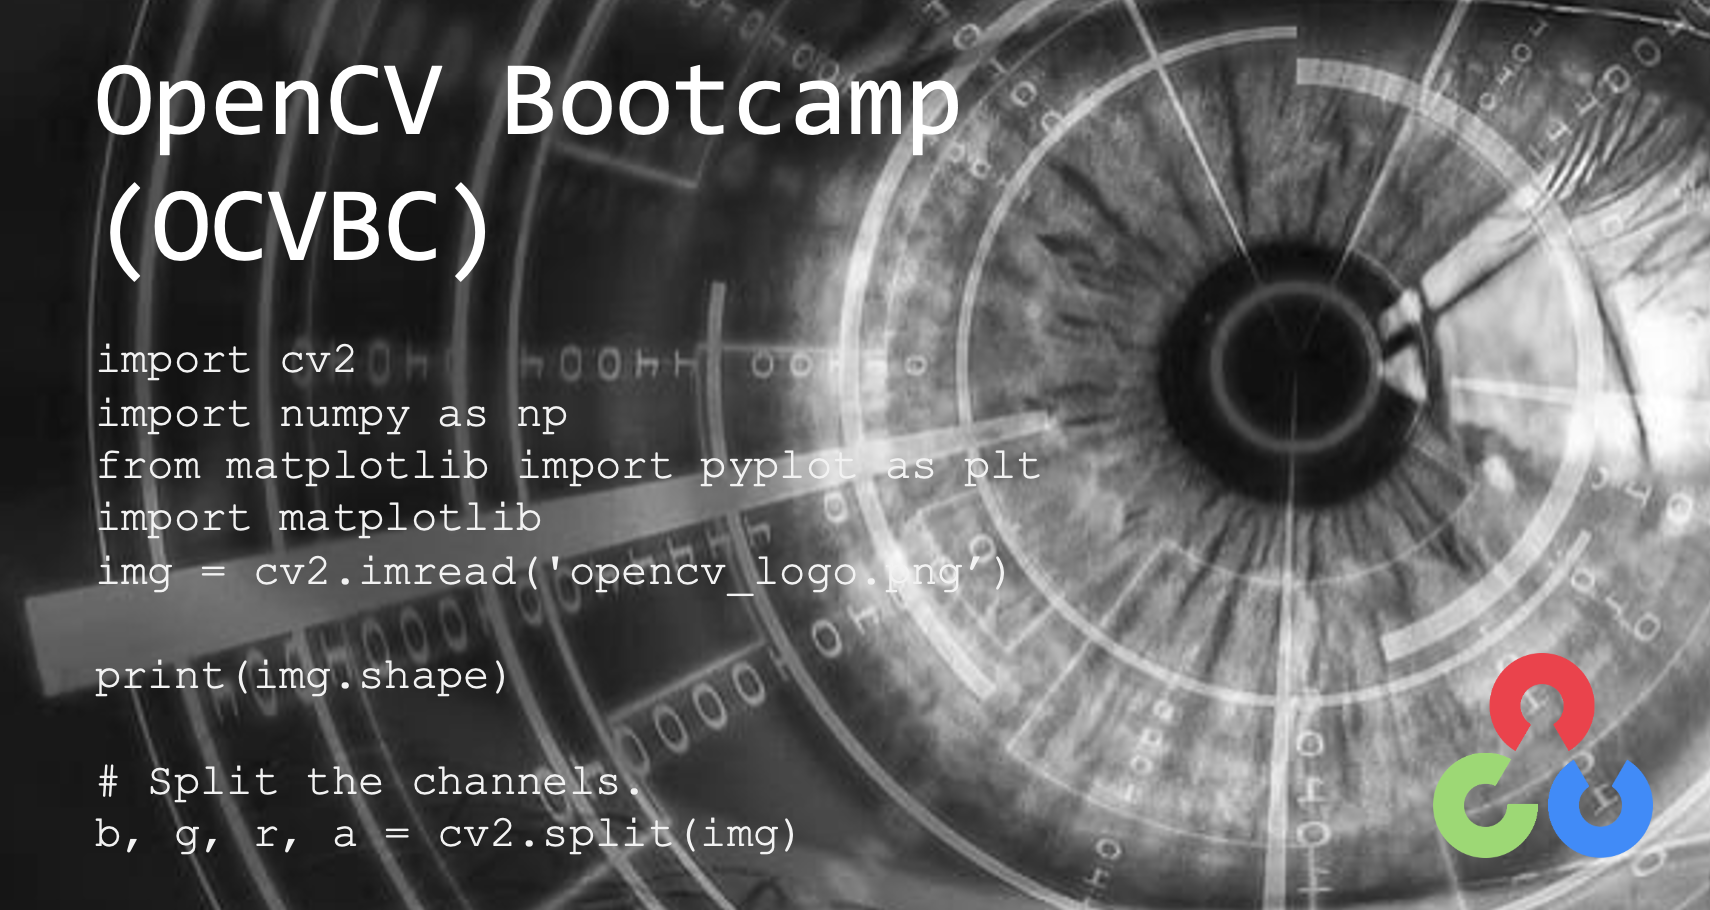 FREE OpenCV Bootcamp